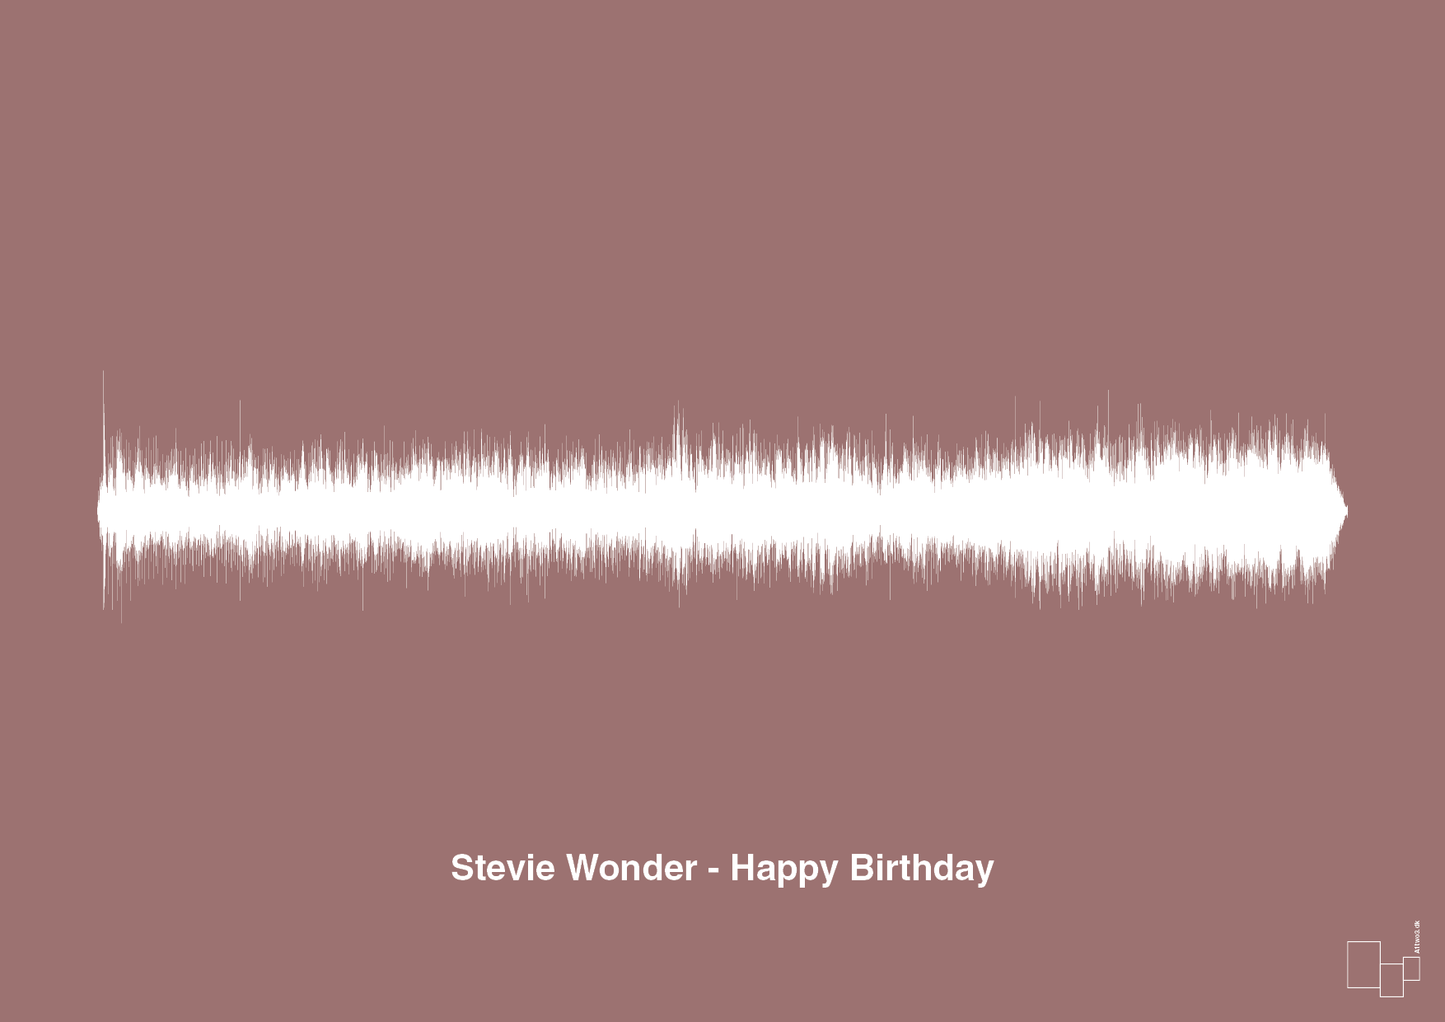 stevie wonder - happy birthday - Plakat med Musik i Plum